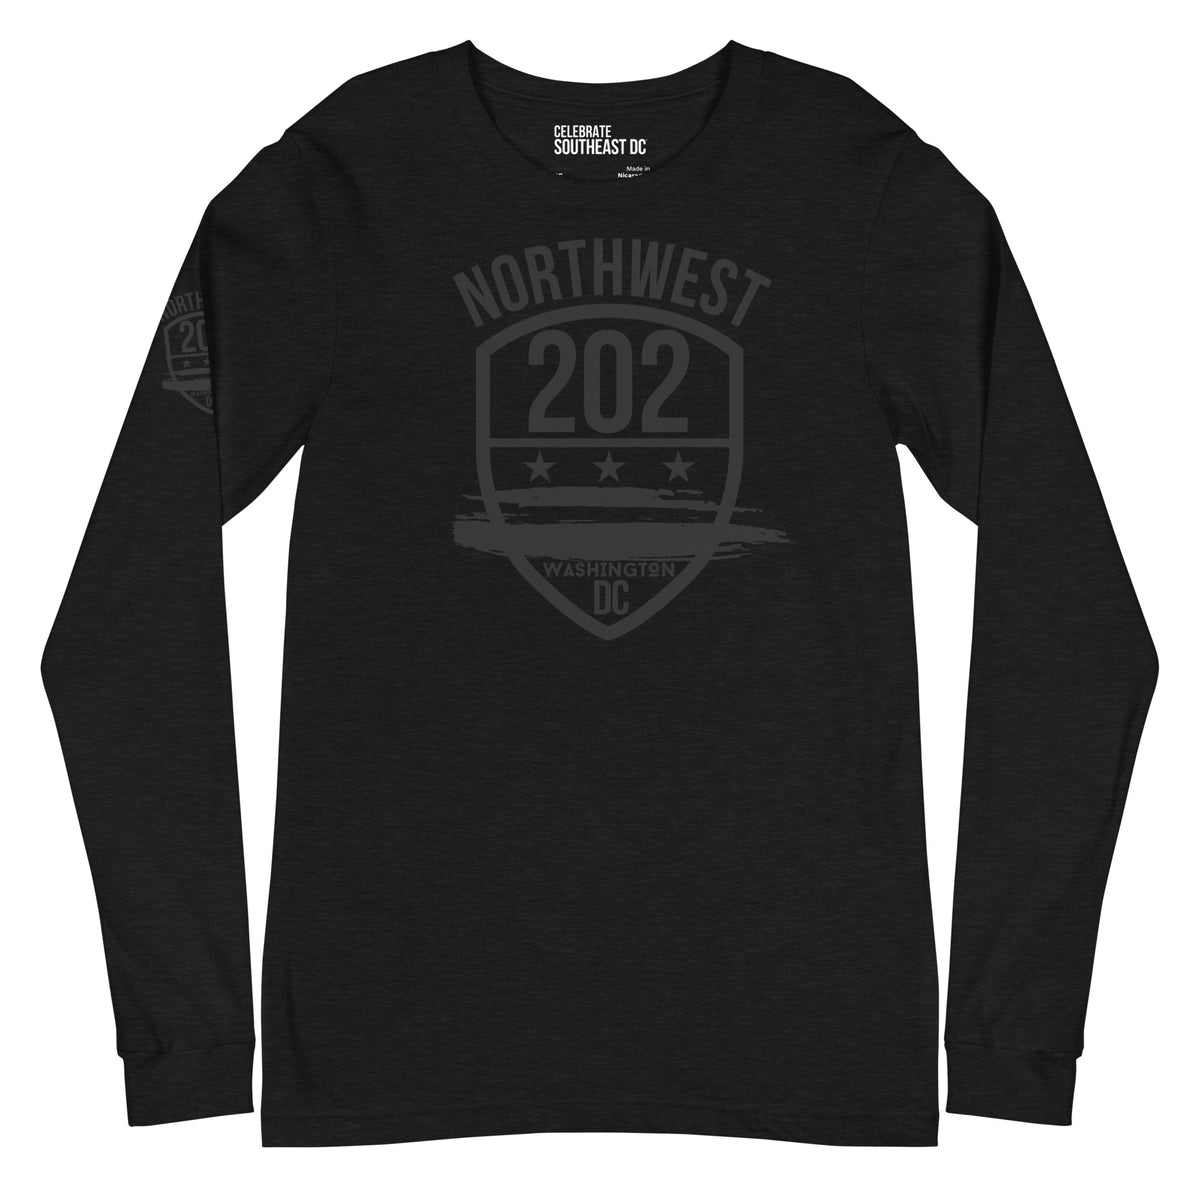 NORTHWEST/202 -Black Emblem on Black, Unisex Long Sleeve Tee